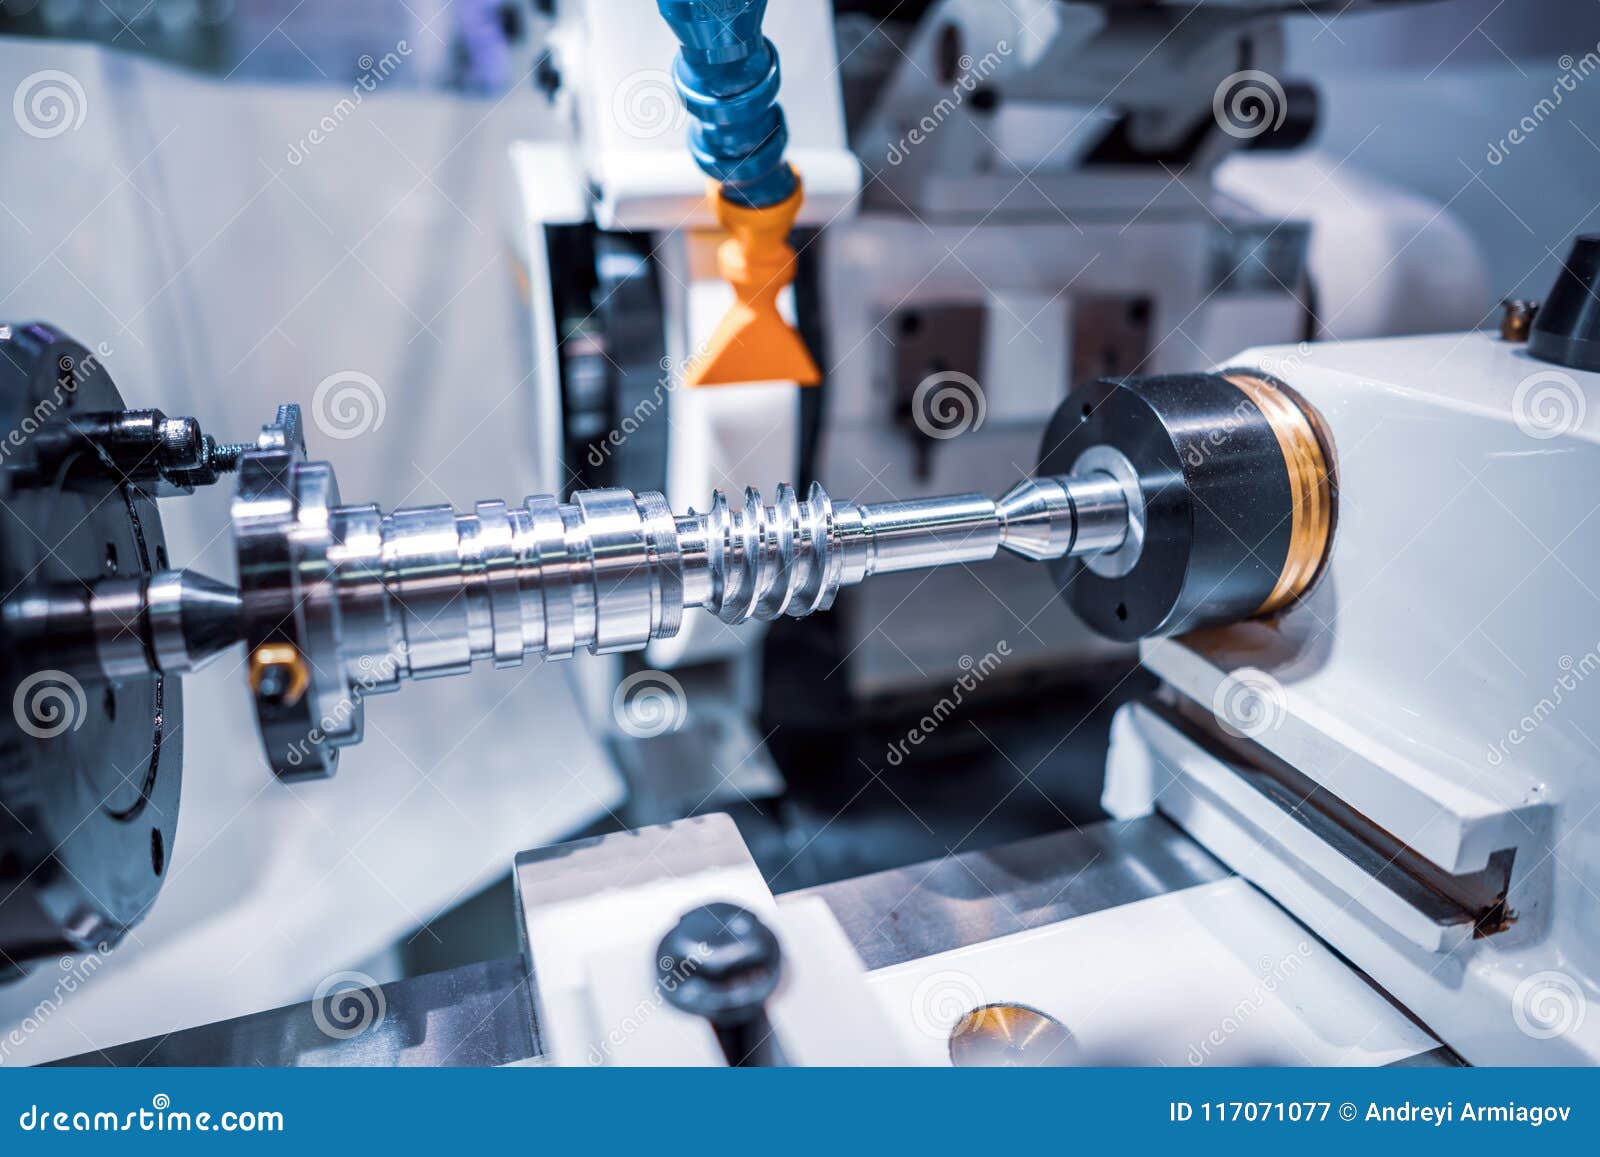 metalworking cnc milling machine. cutting metal modern processing technology.